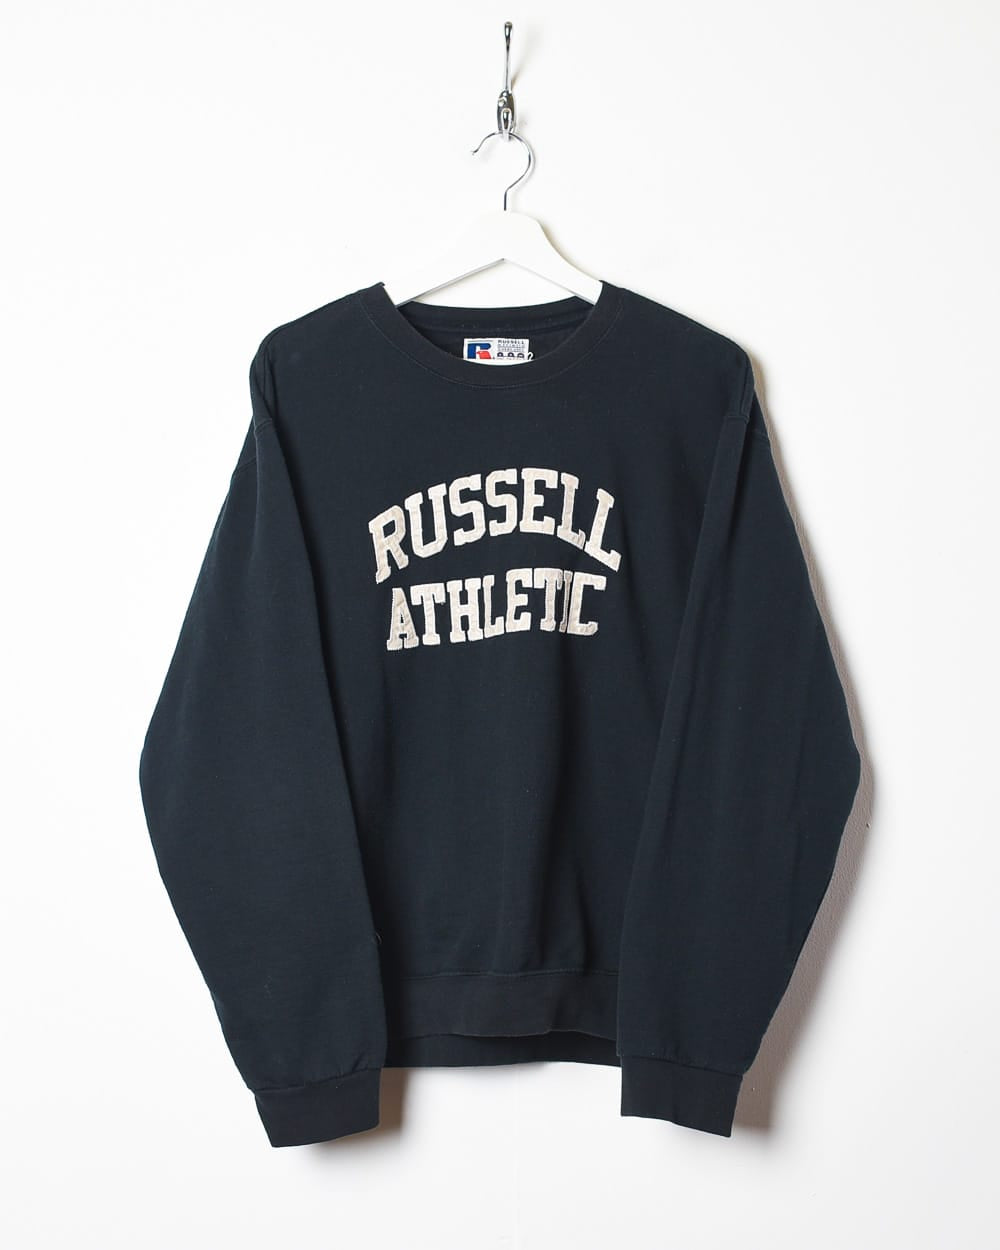 Vintage 90s Black Russell Athletic Sweatshirt - Small Cotton